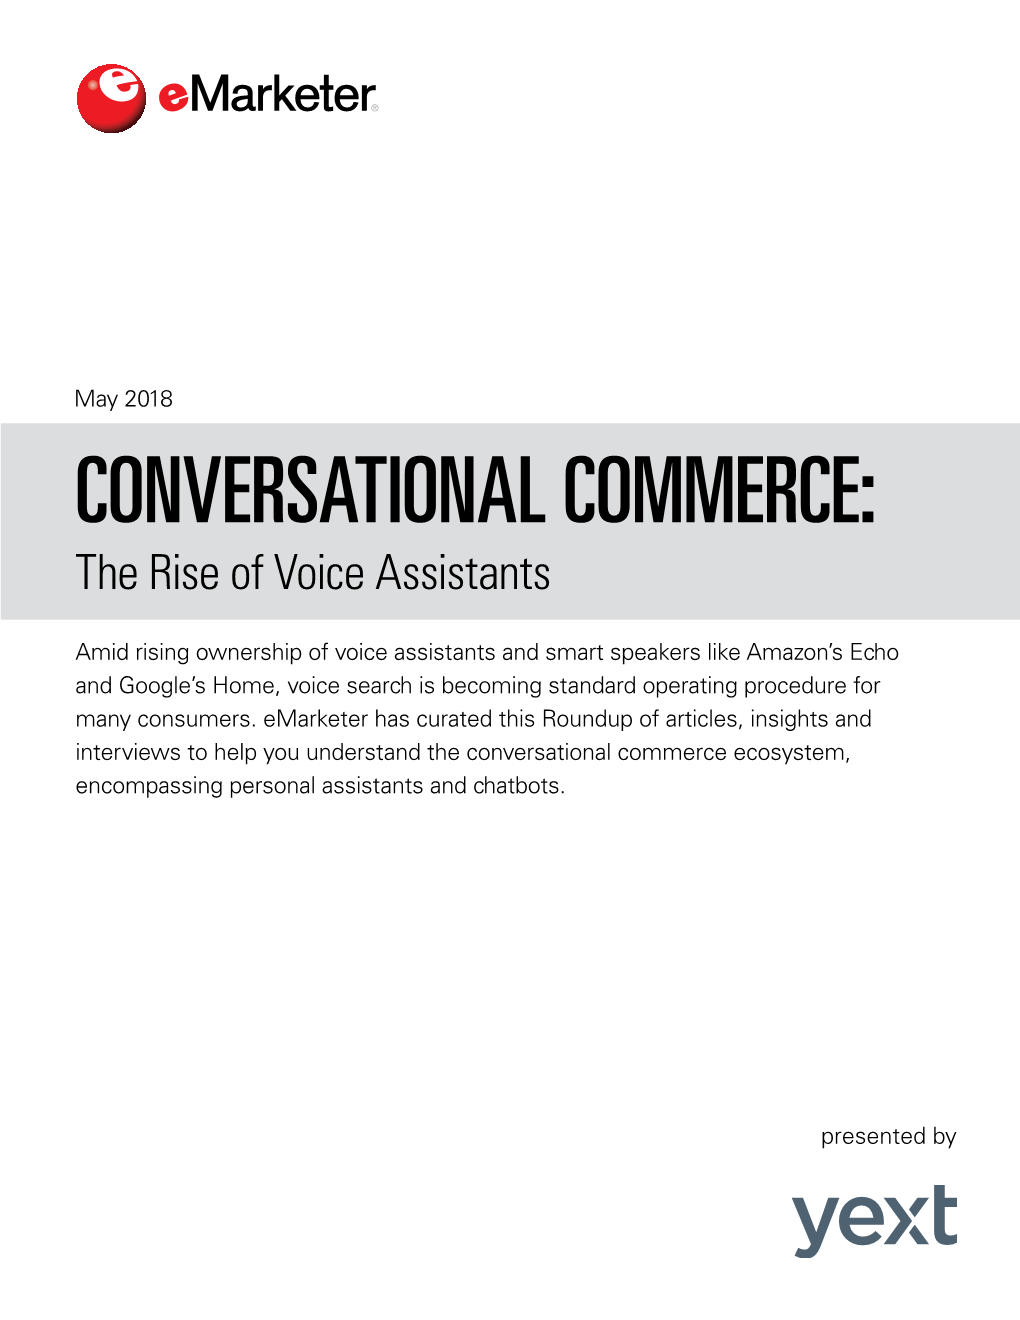 CONVERSATIONAL COMMERCE: the Rise of Voice Assistants